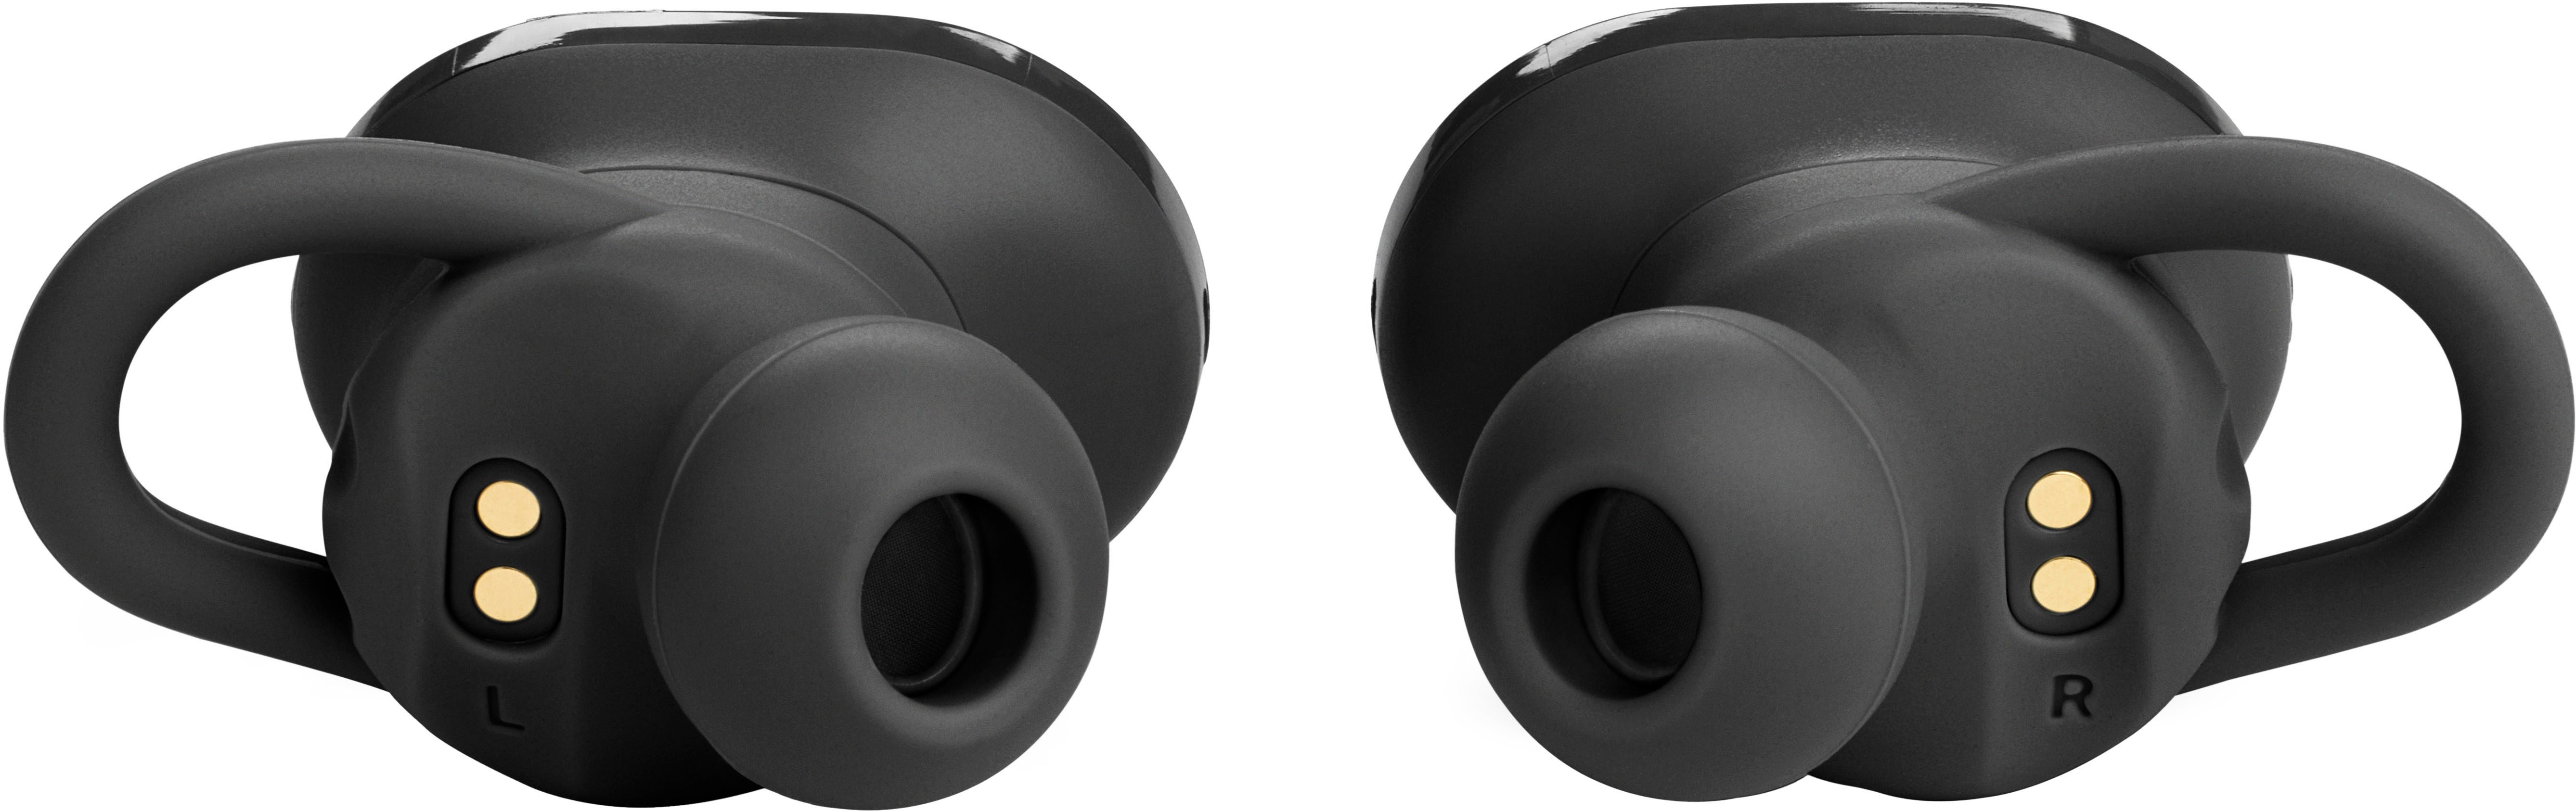 Earbud Race Waterproof Best True Black Buy Headphones JBL Wireless JBLENDURACEBLKAM Endurance - Sport